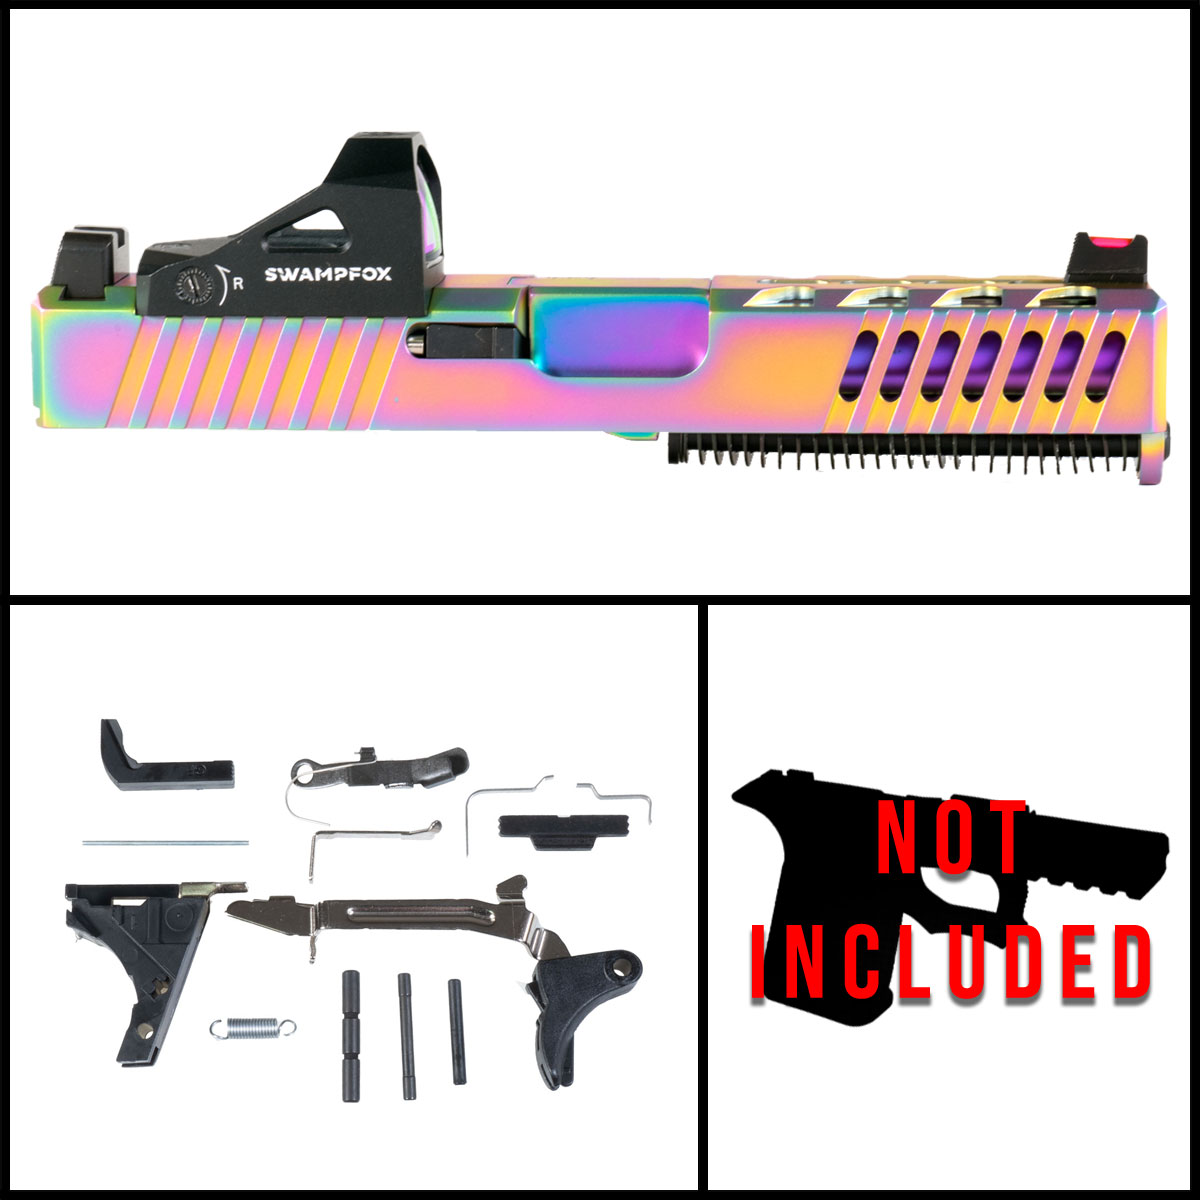 DTT 'SkyShade w/ Swampfox Justice RMR' 9mm Full Pistol Build Kits (Everything Minus Frame) - Glock 19 Gen 1-2 Compatible